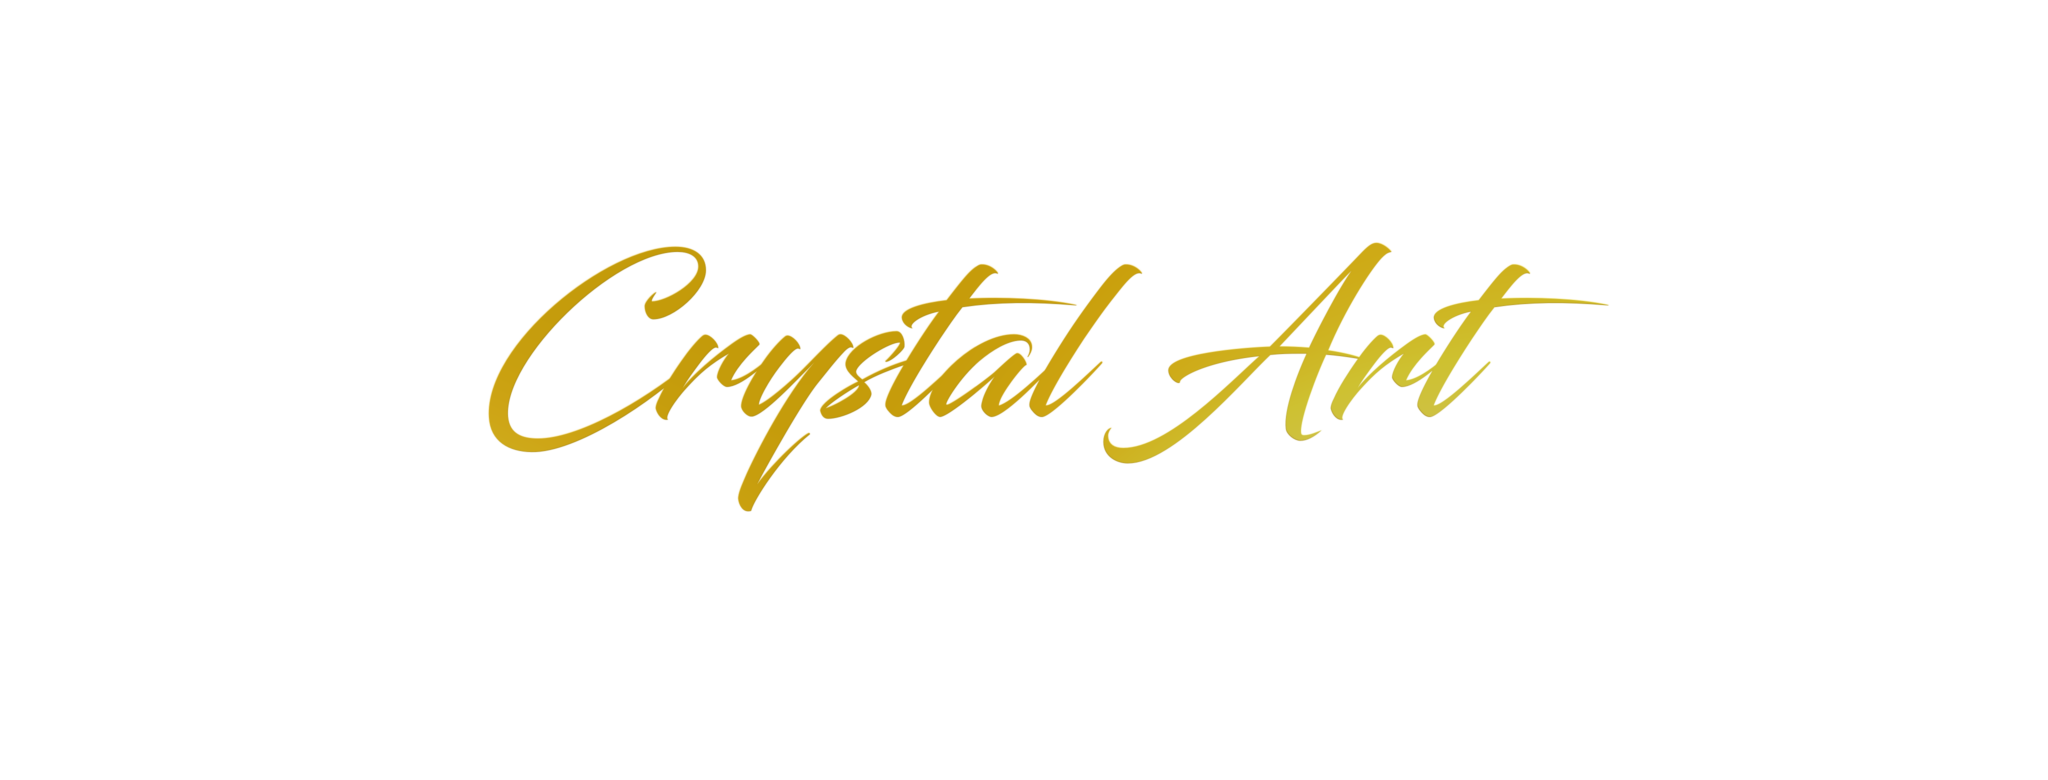 Gold Crystal Art Lettering Group